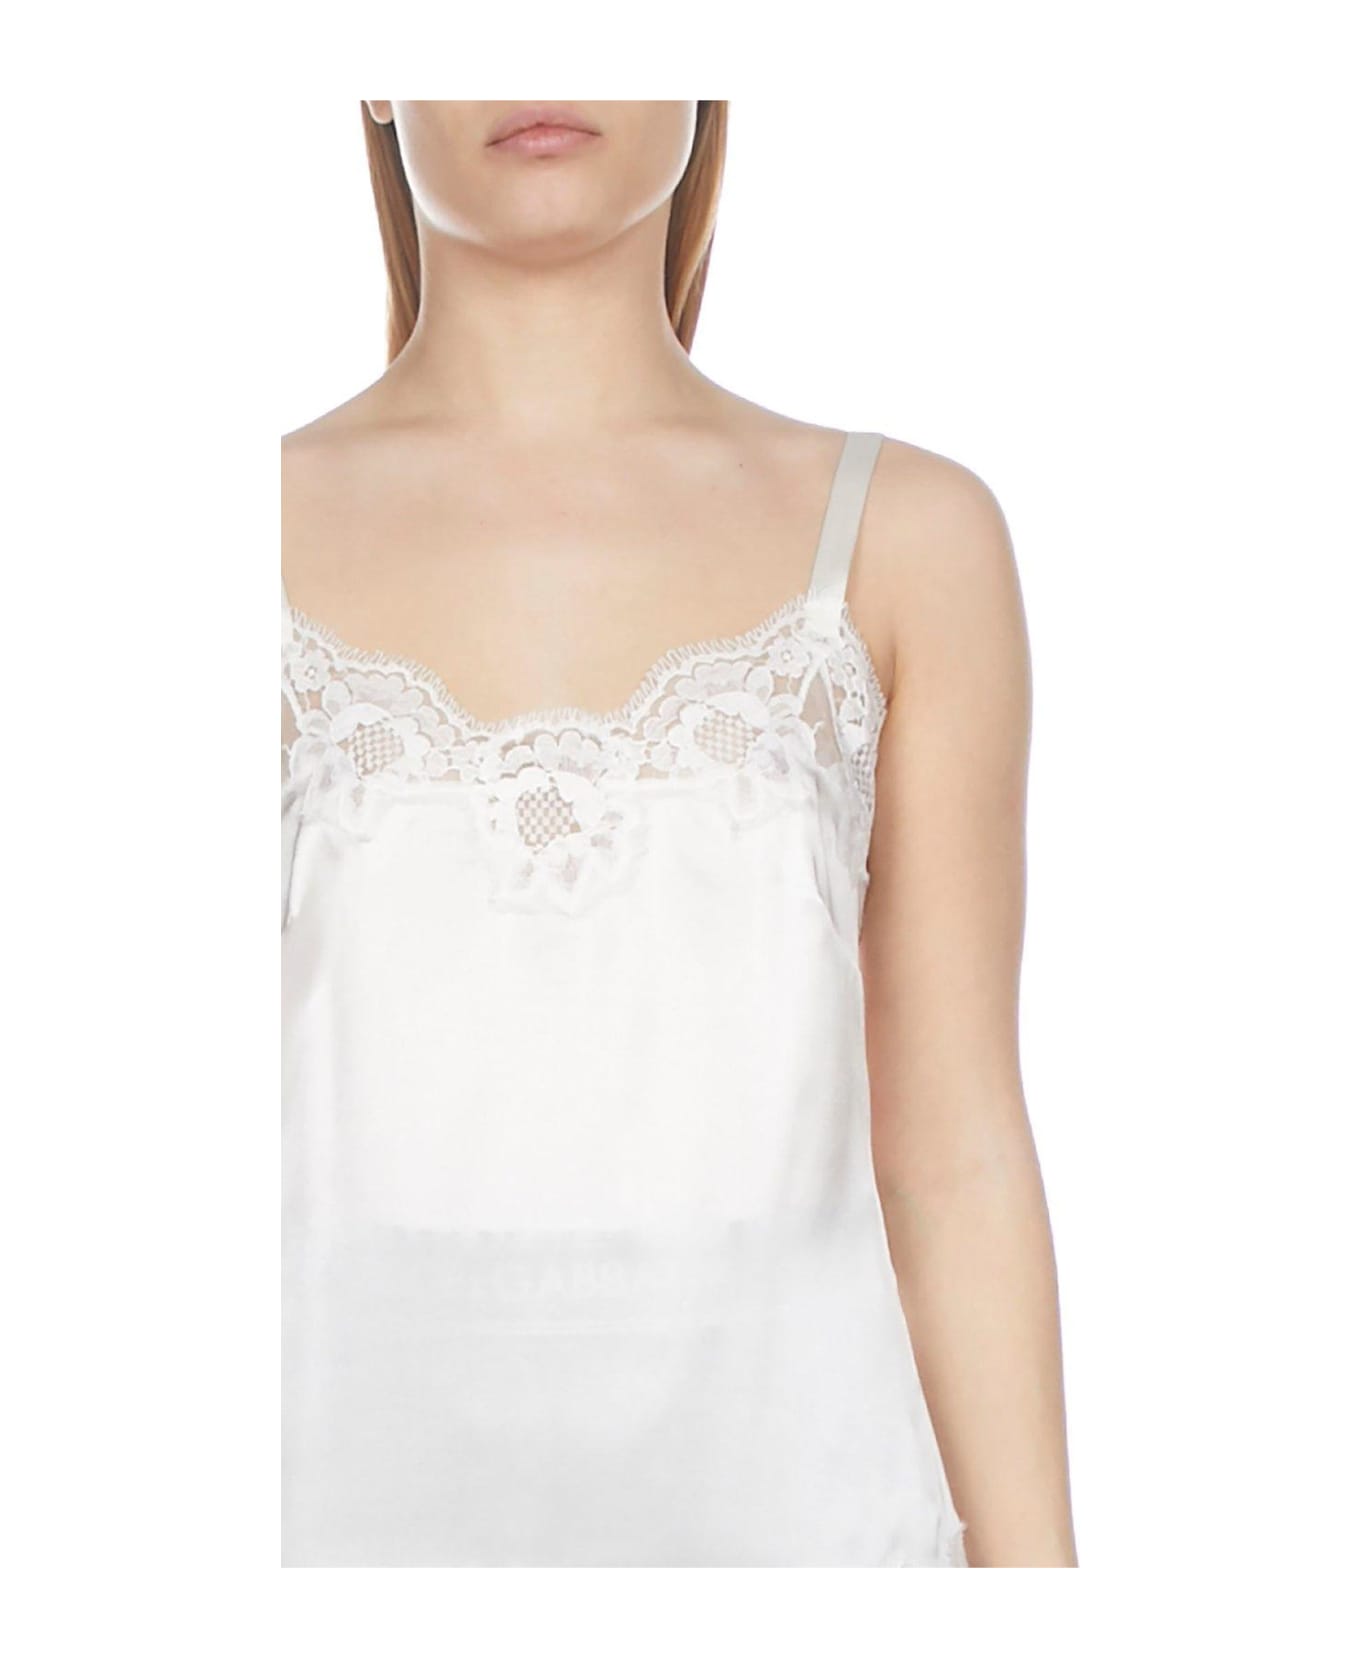 Dolce & Gabbana Lace Camisole - Bianco naturale